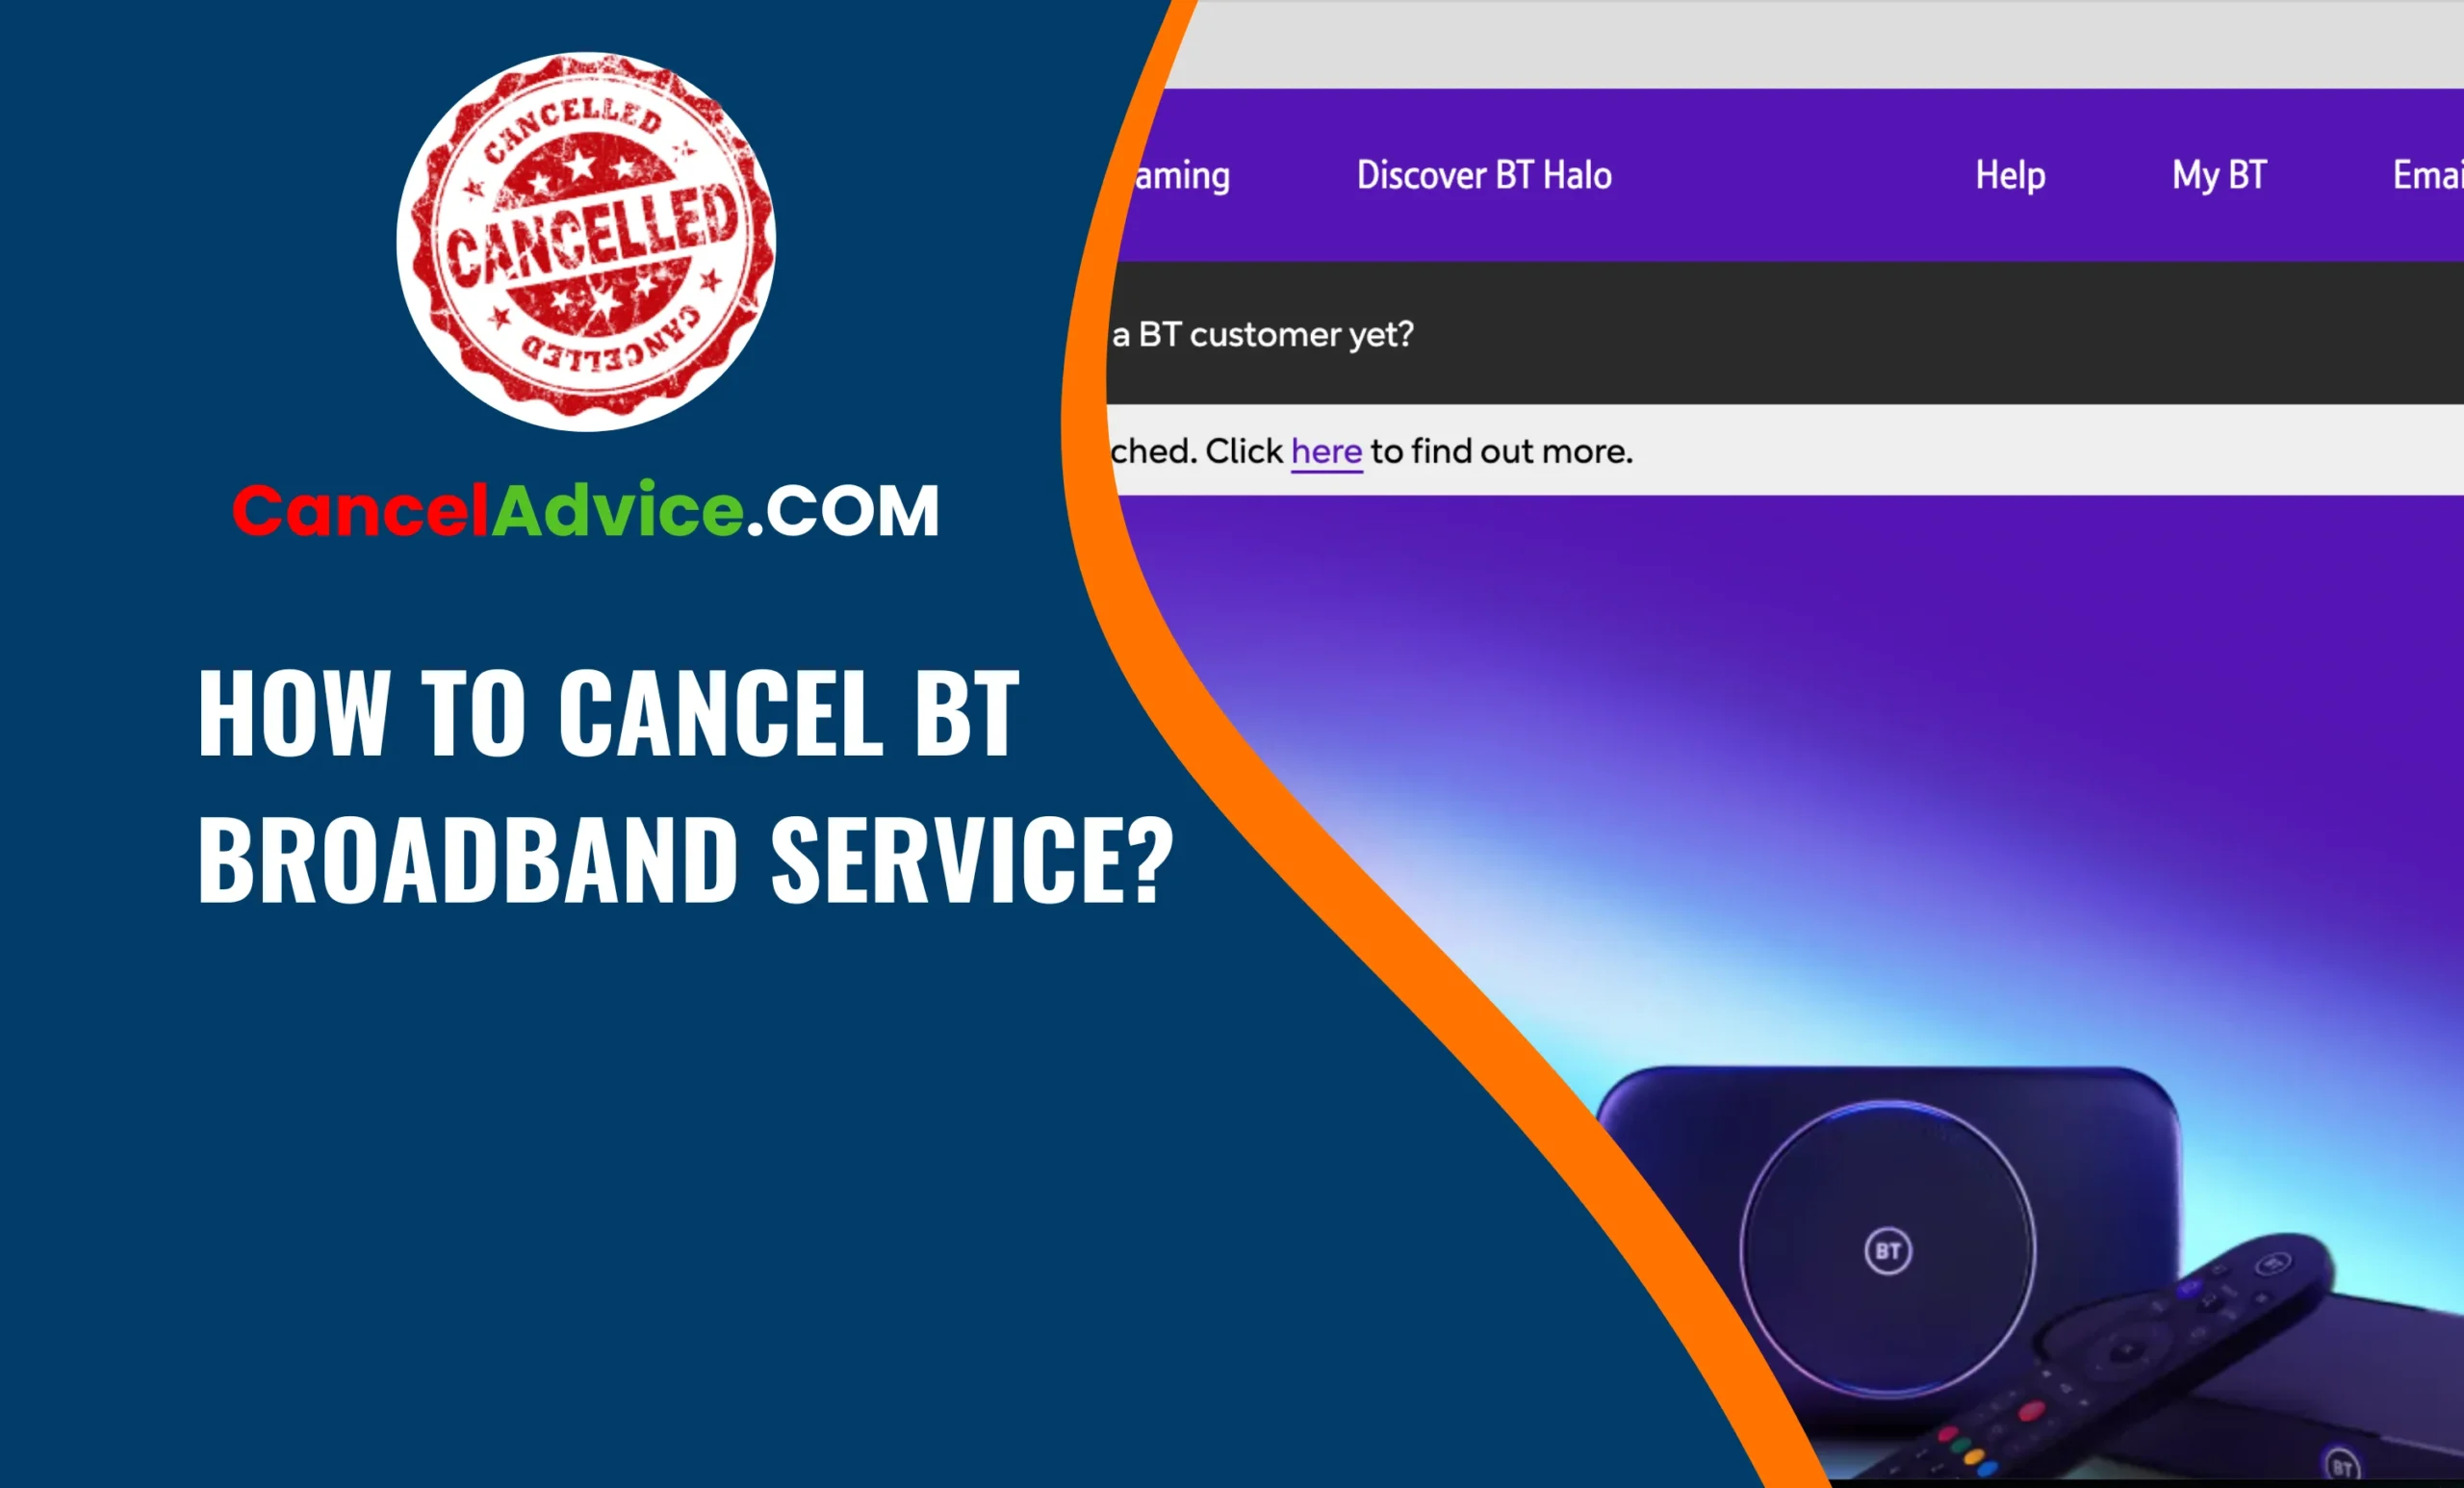 How to Cancel BT Broadband Service